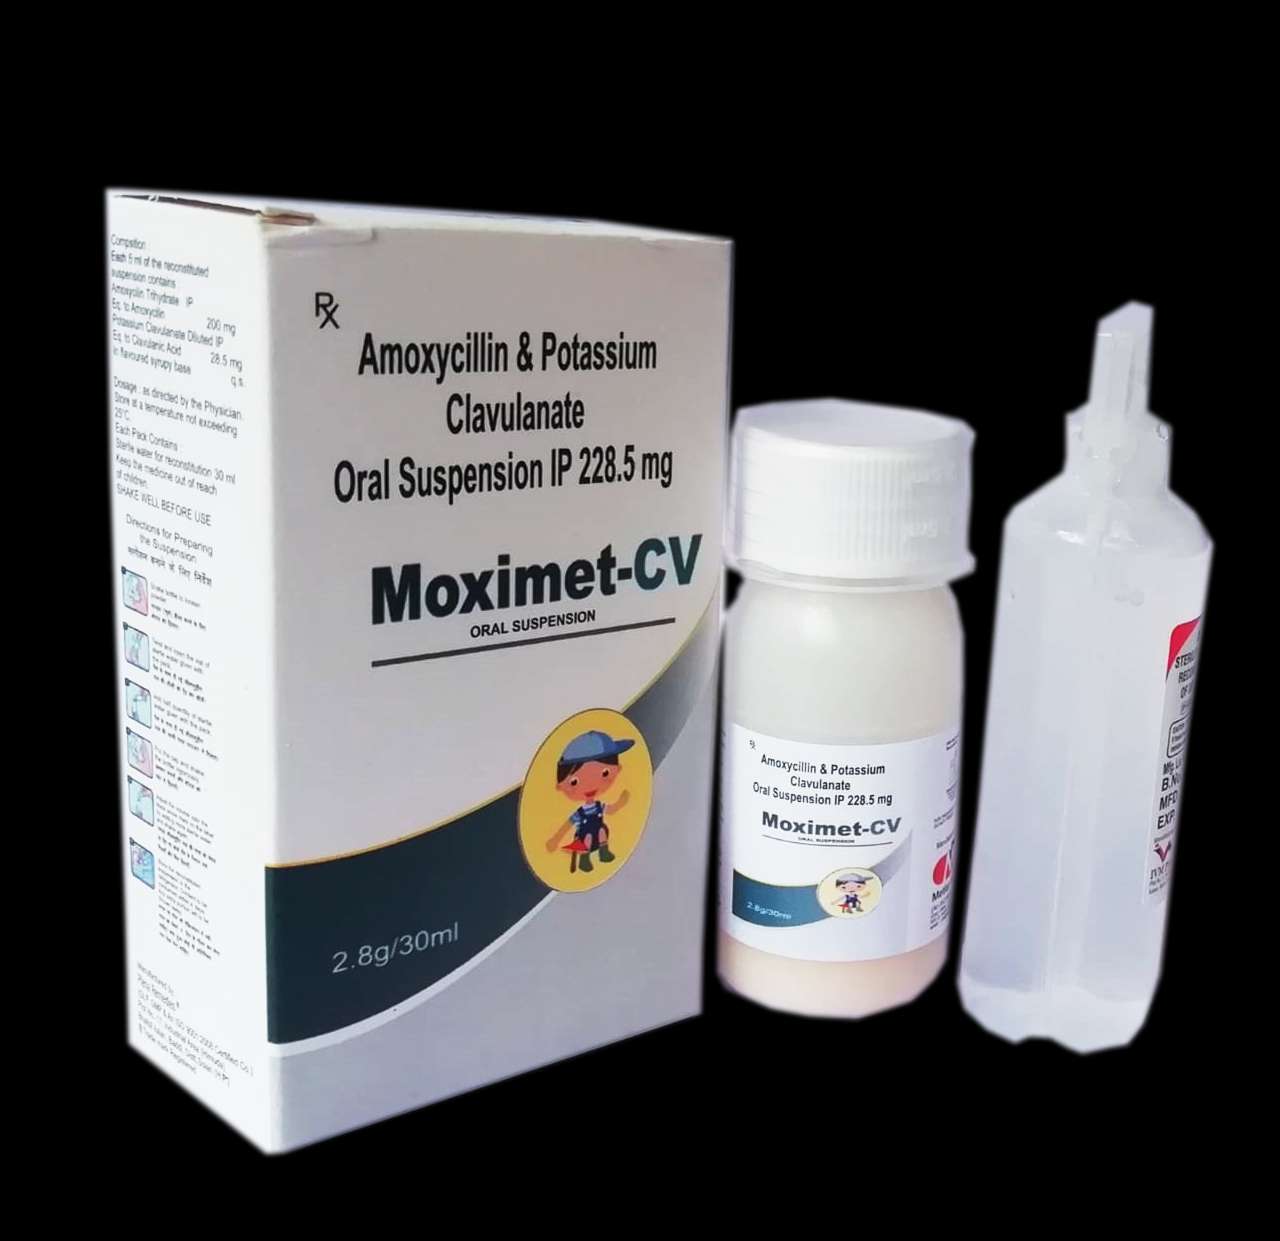 amoxycillin 200 mg + clavulanic acid 28.5 mg 
ml (with